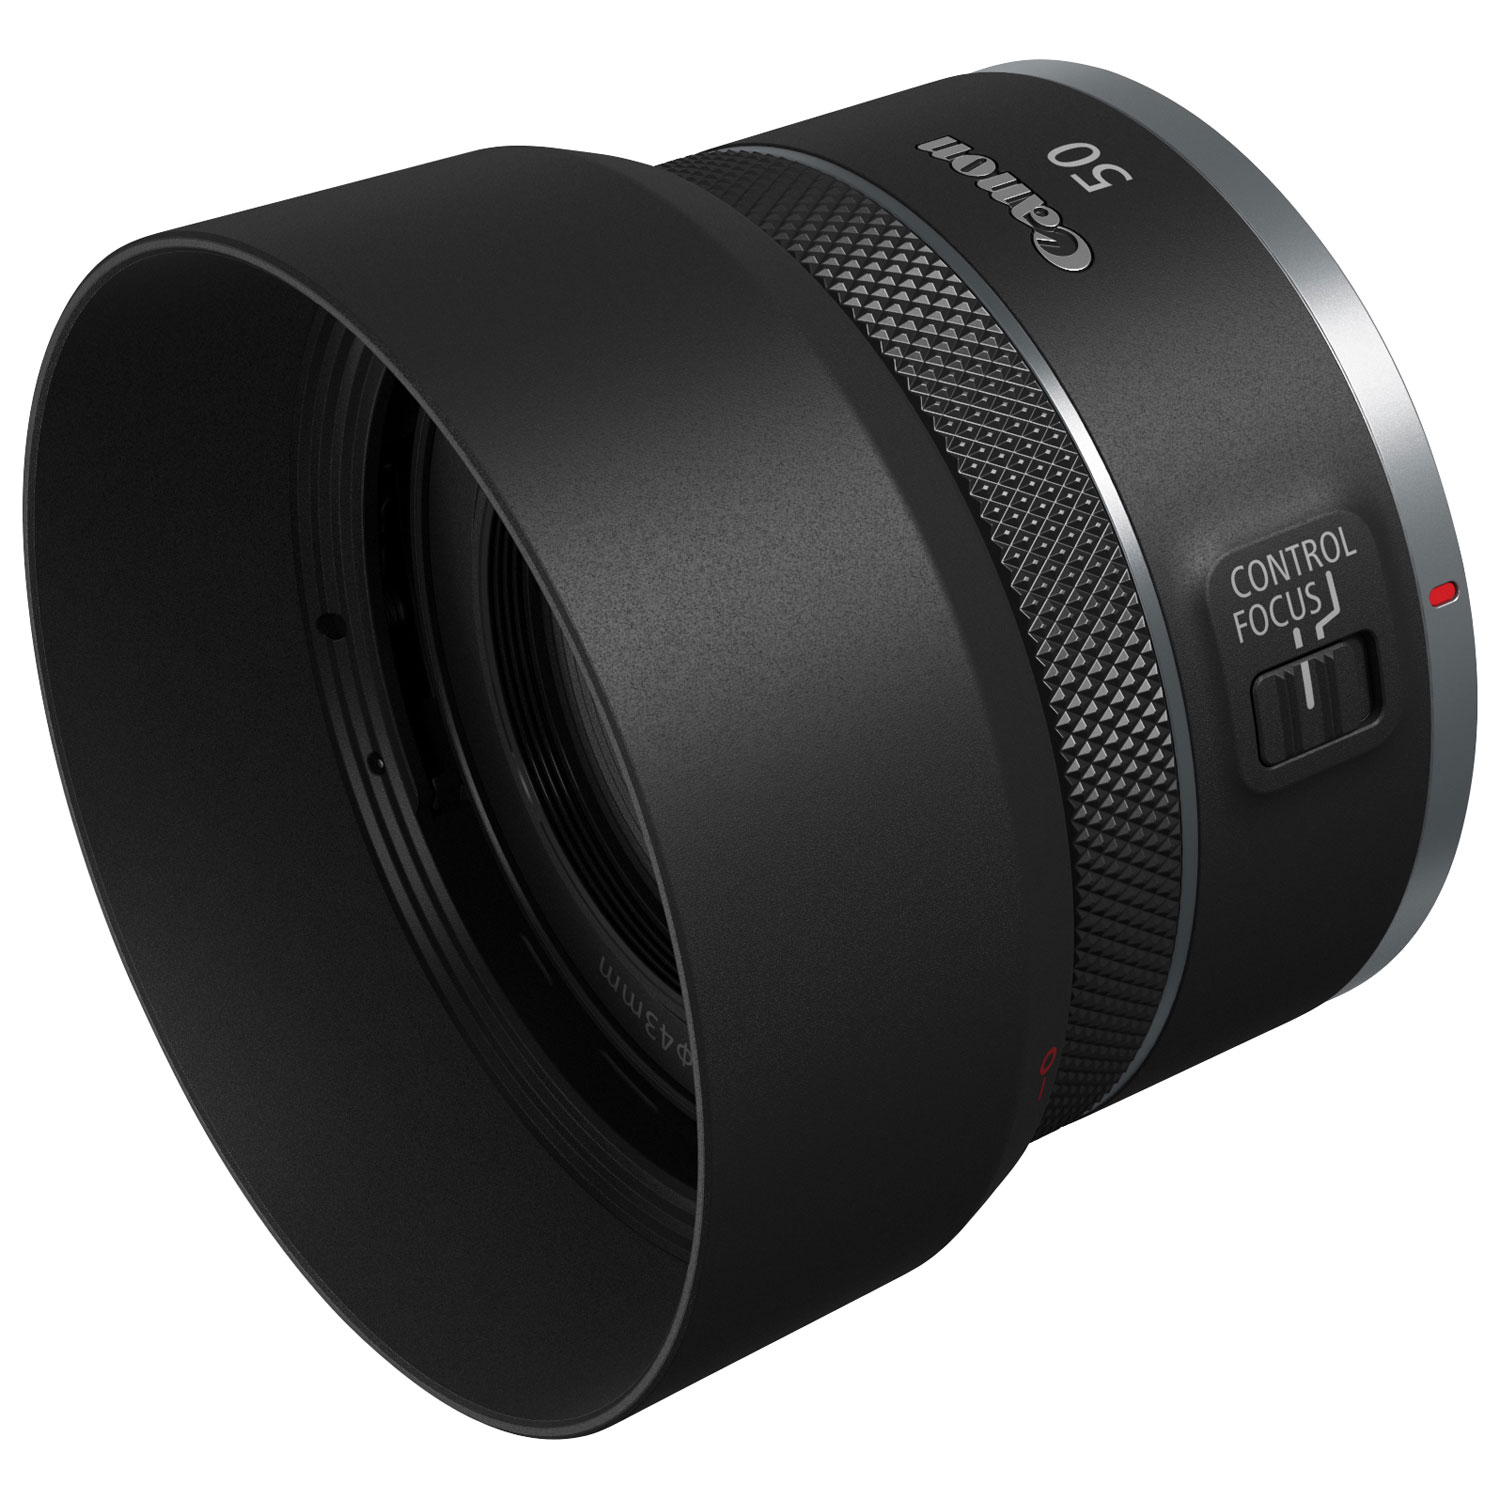 Canon RF 50mm f/1.8 STM Lens - Black | Best Buy Canada